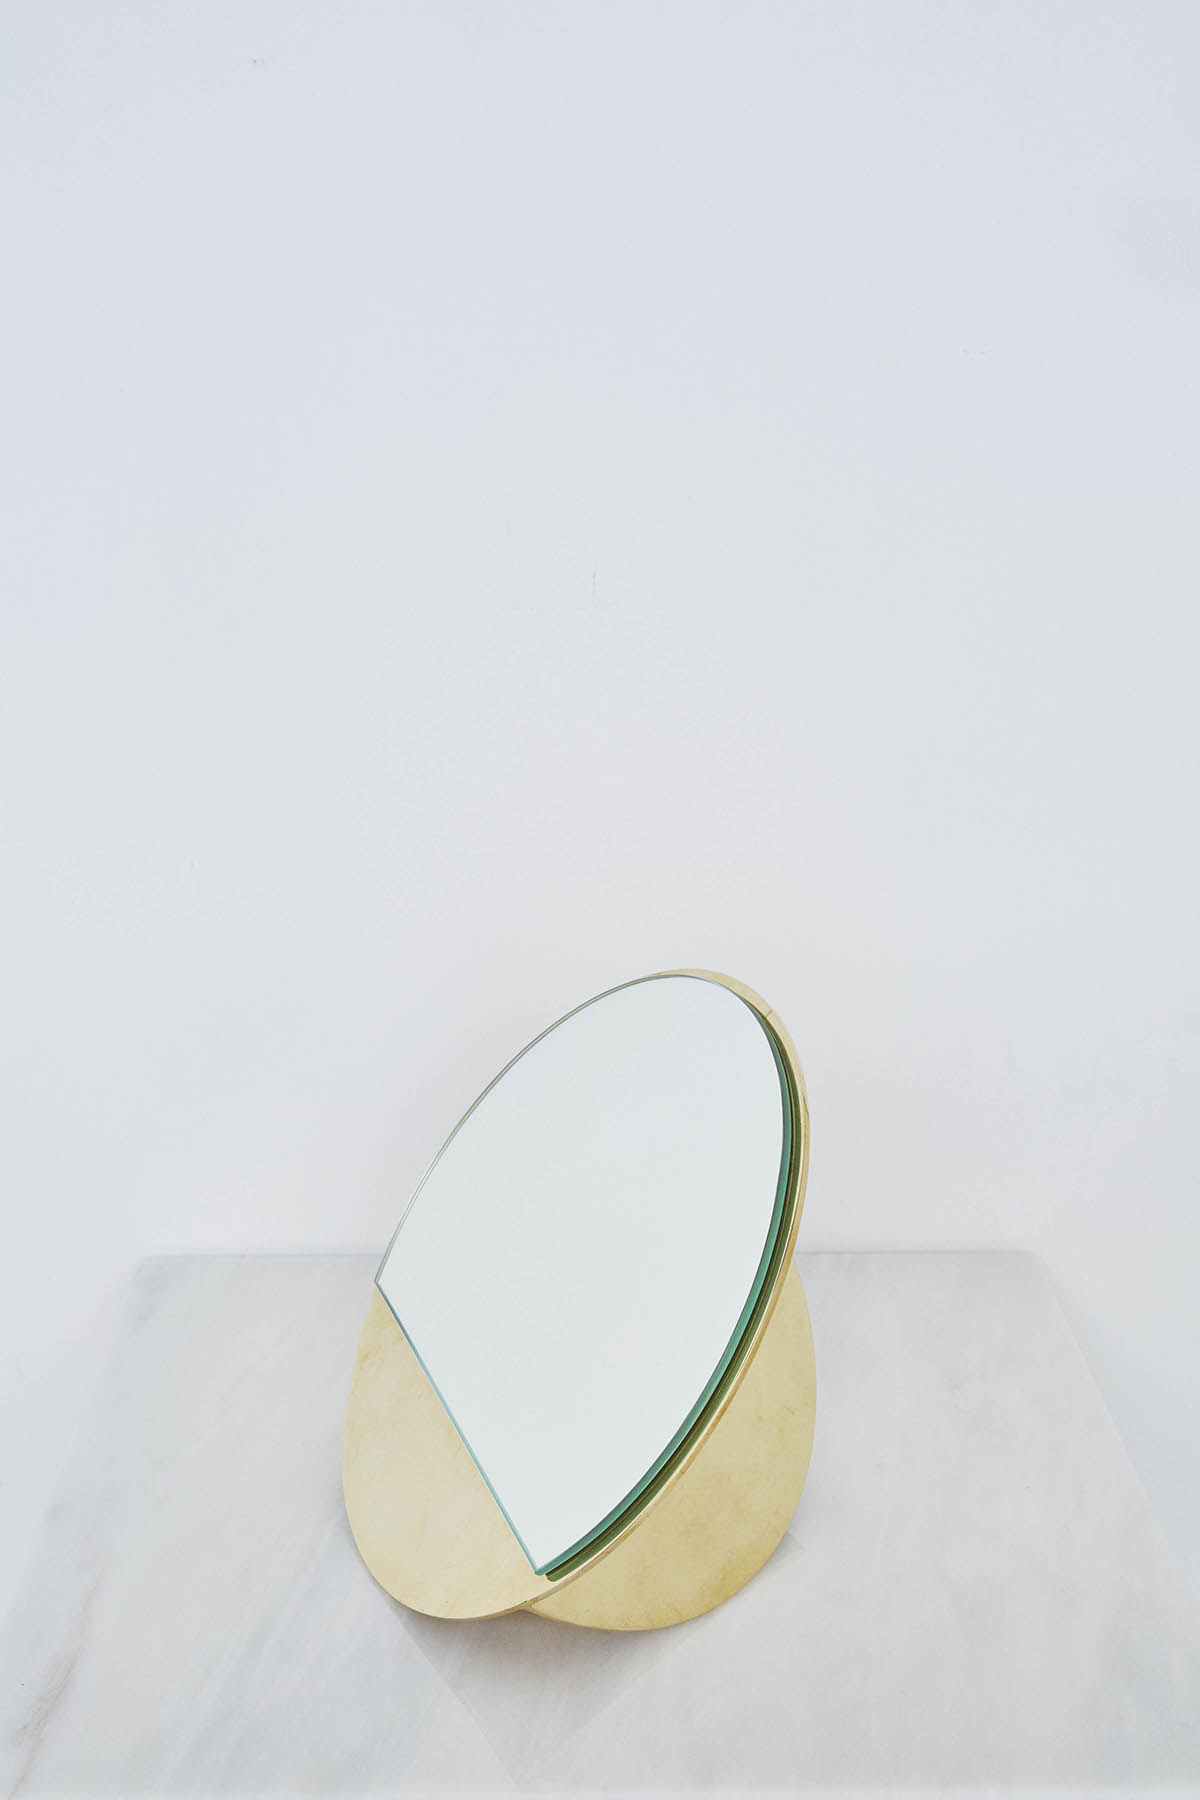 2015.KRISTINA_DAM_mirror_sculpture